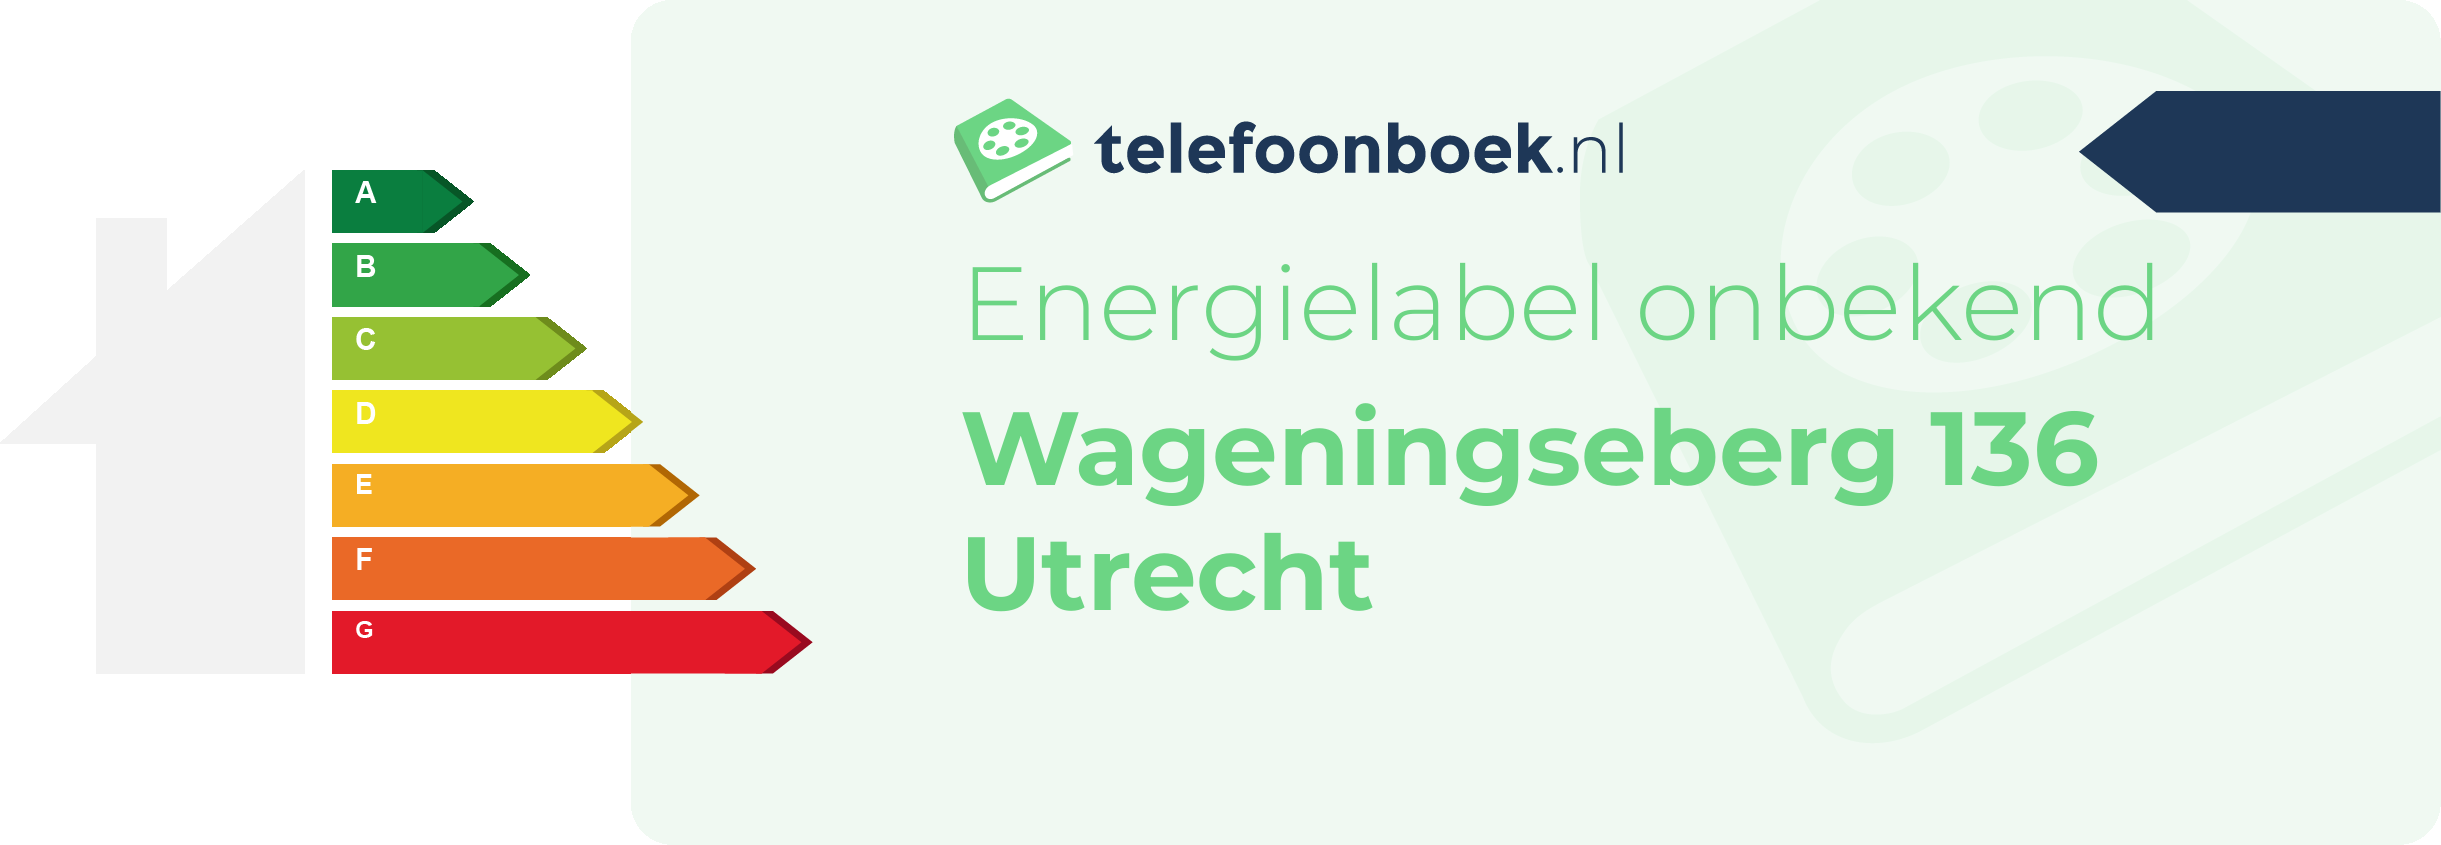 Energielabel Wageningseberg 136 Utrecht